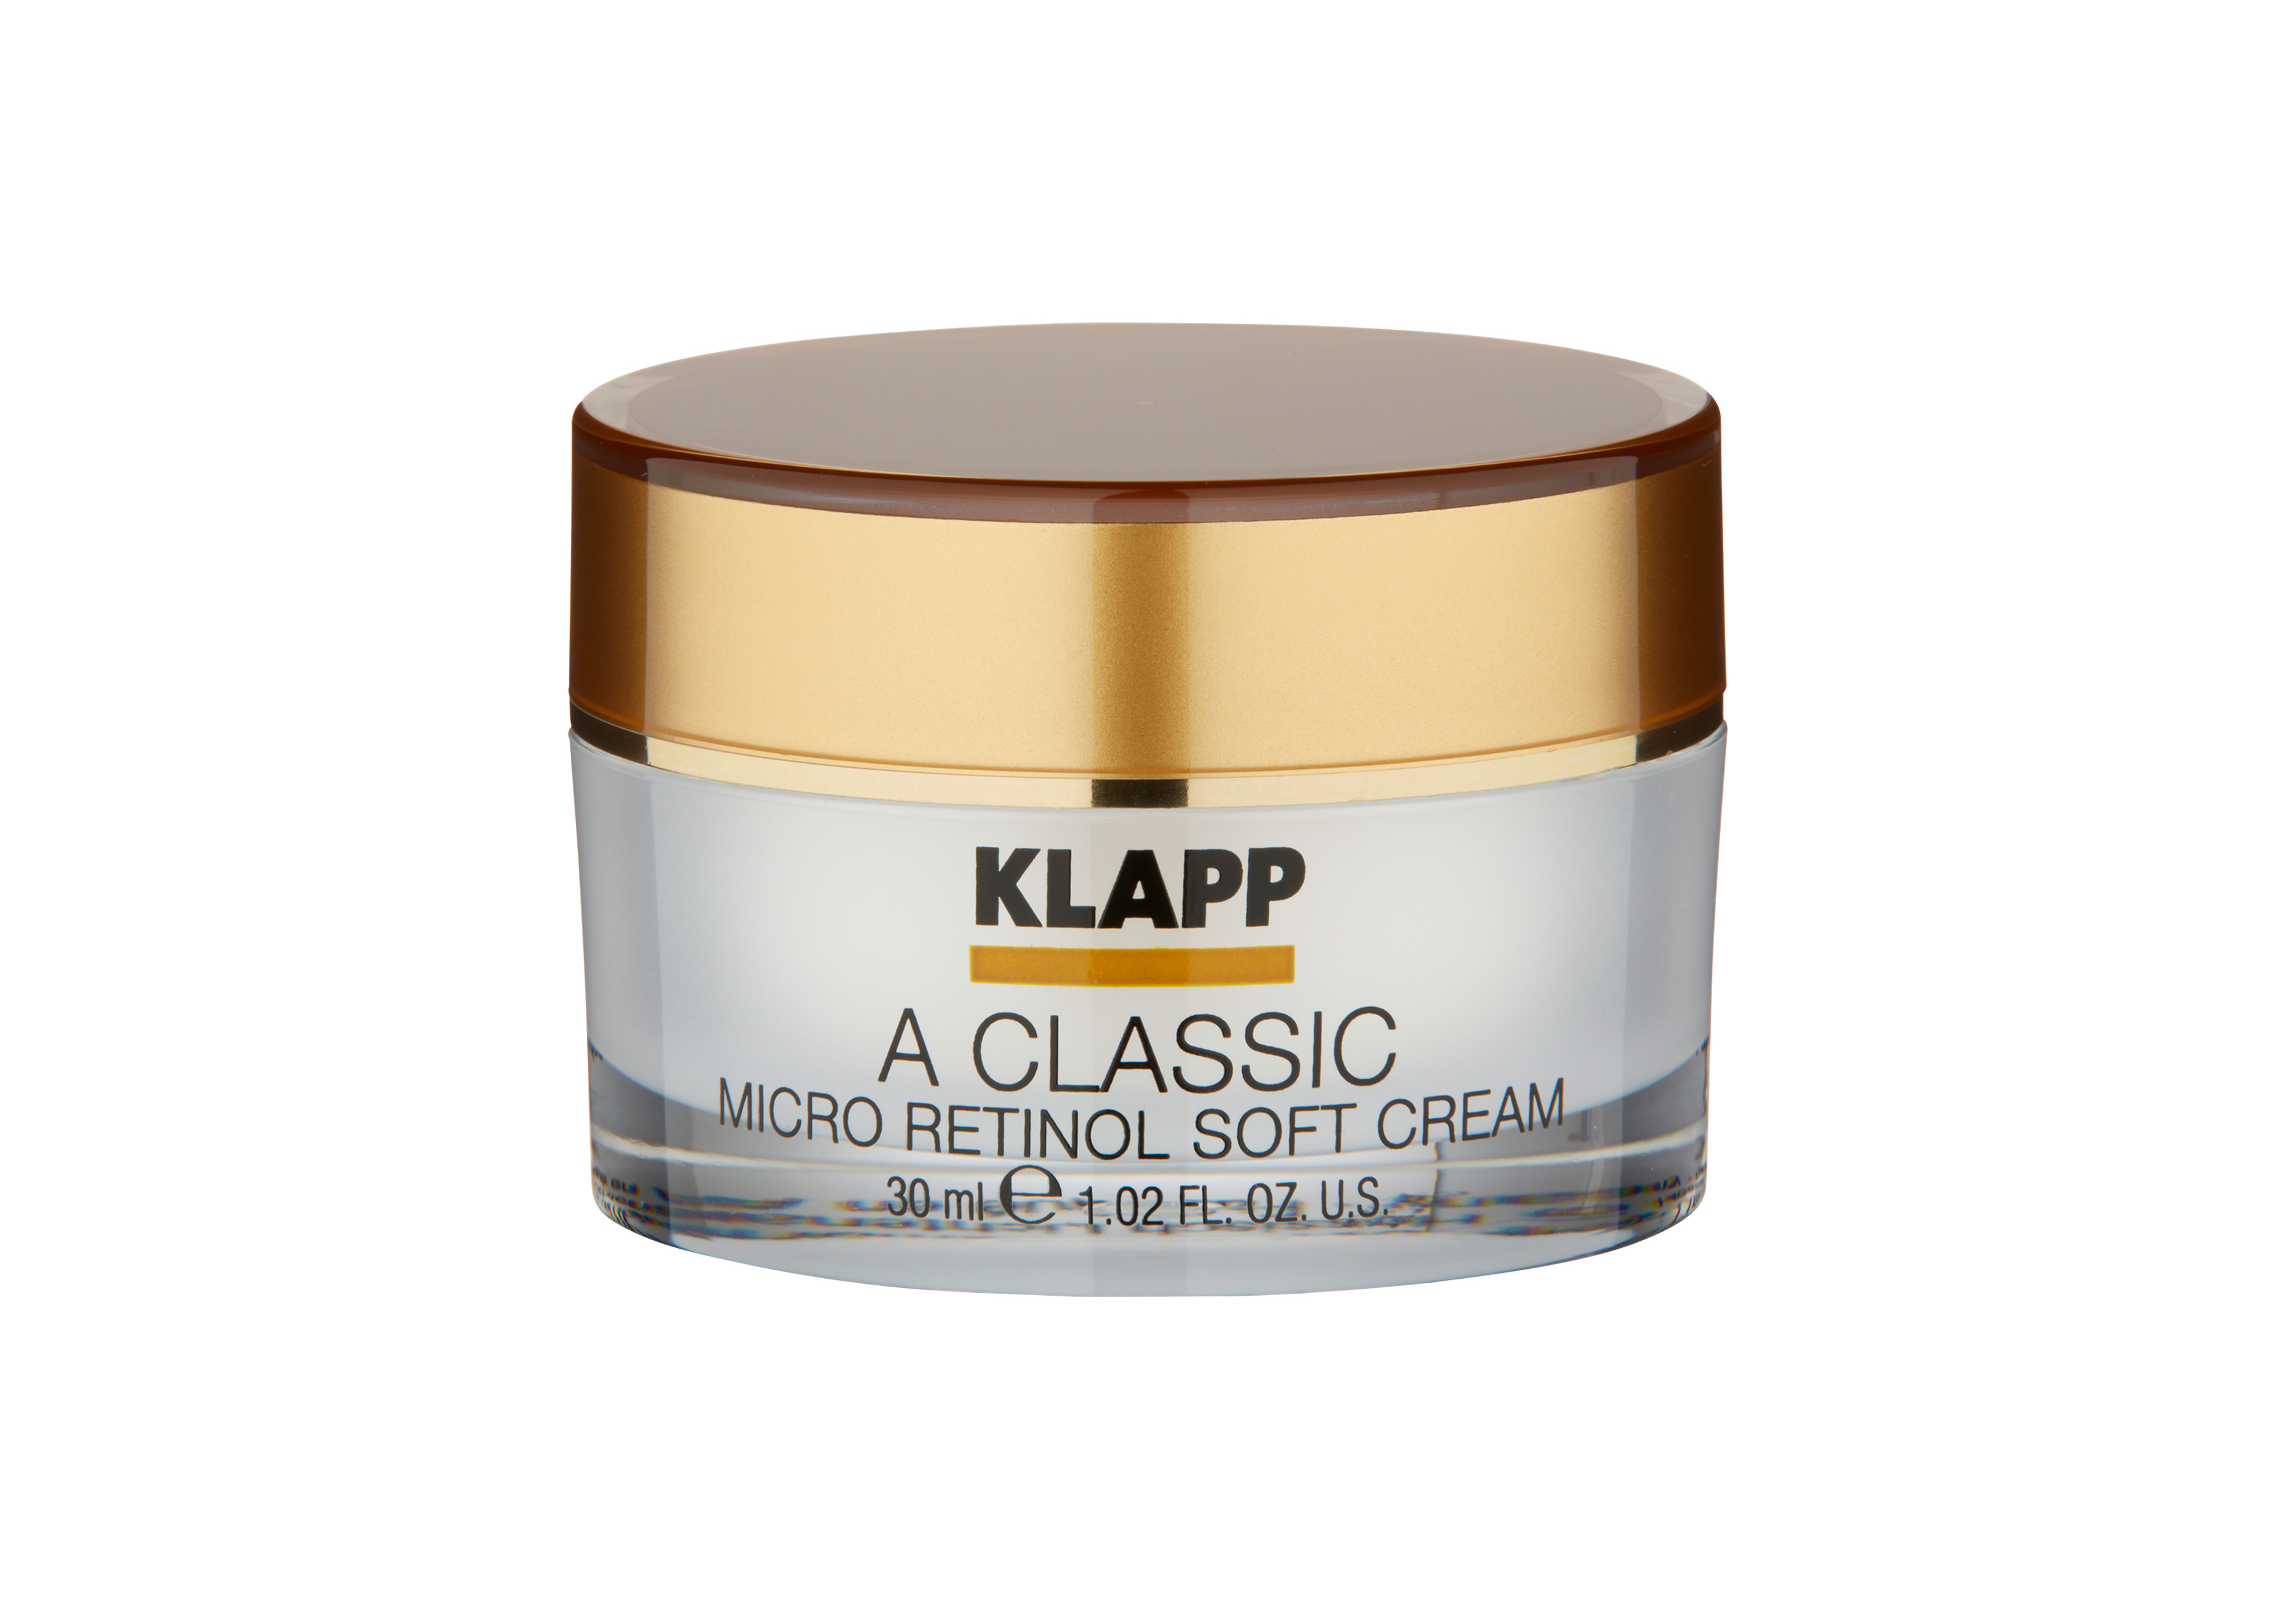 Klapp A Classic Micro Retinol Soft Cream